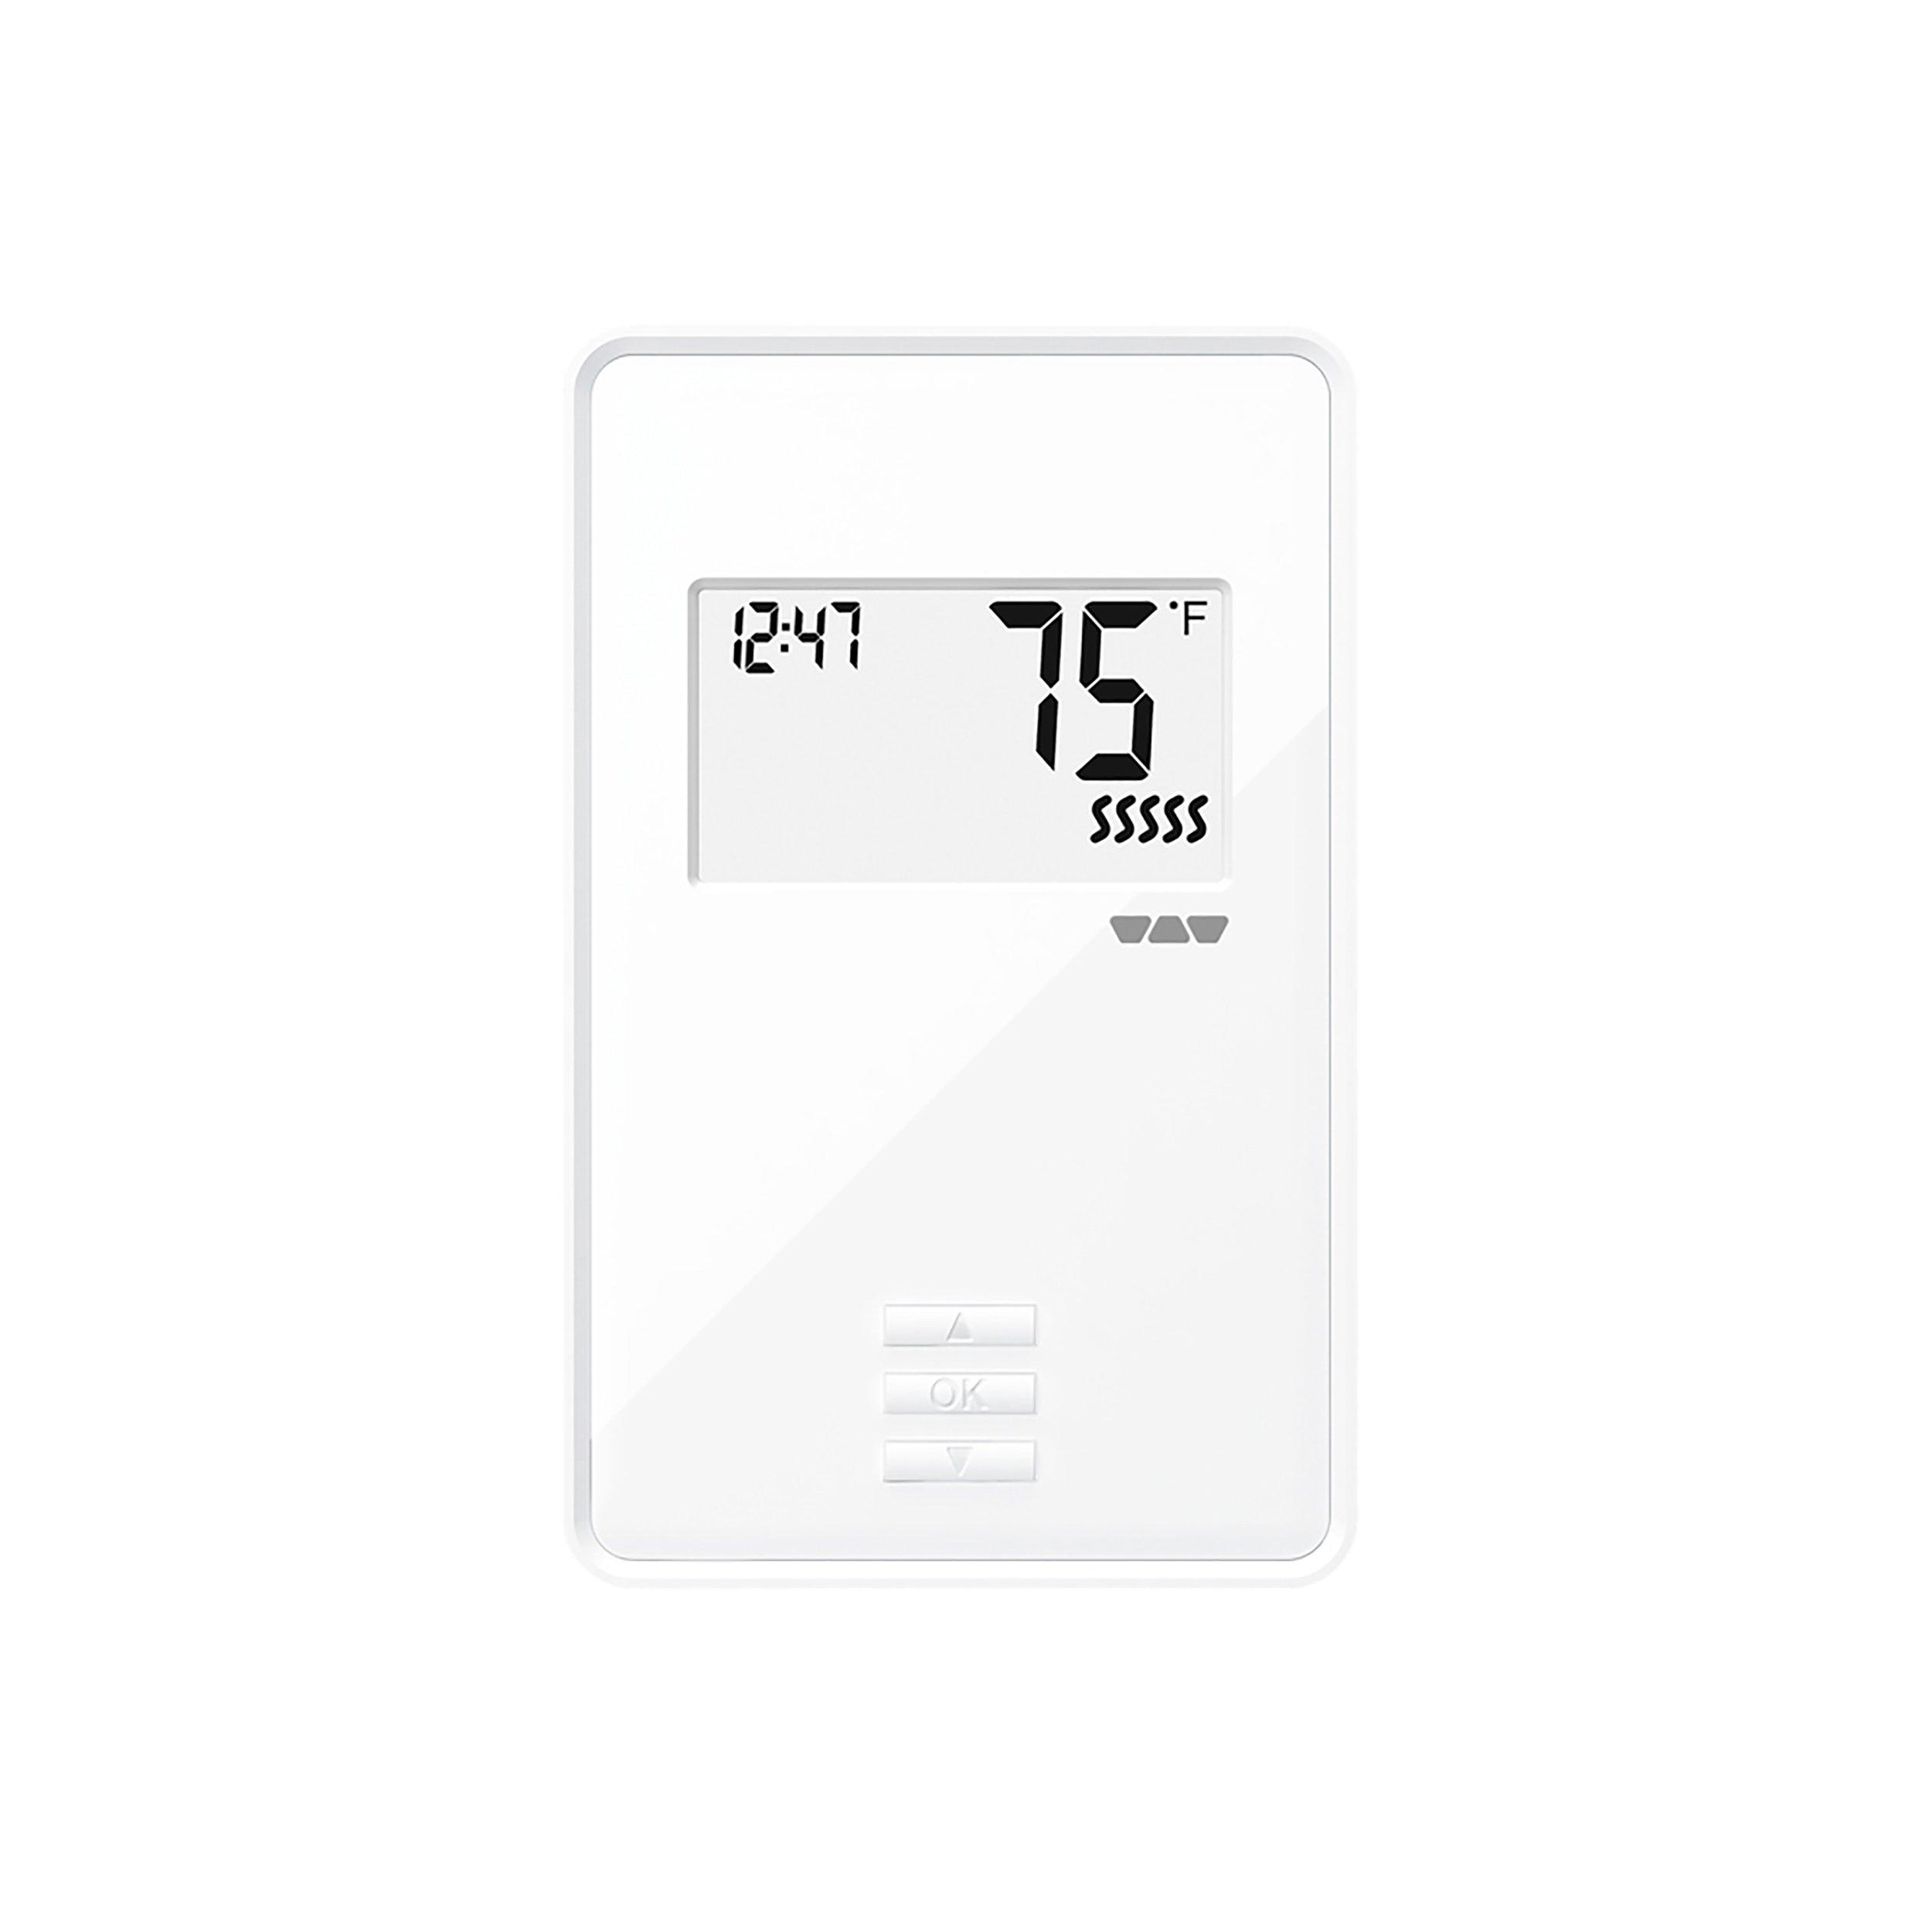 Schluter Ditra-Heat-E-R Non-Programmable Thermostat White